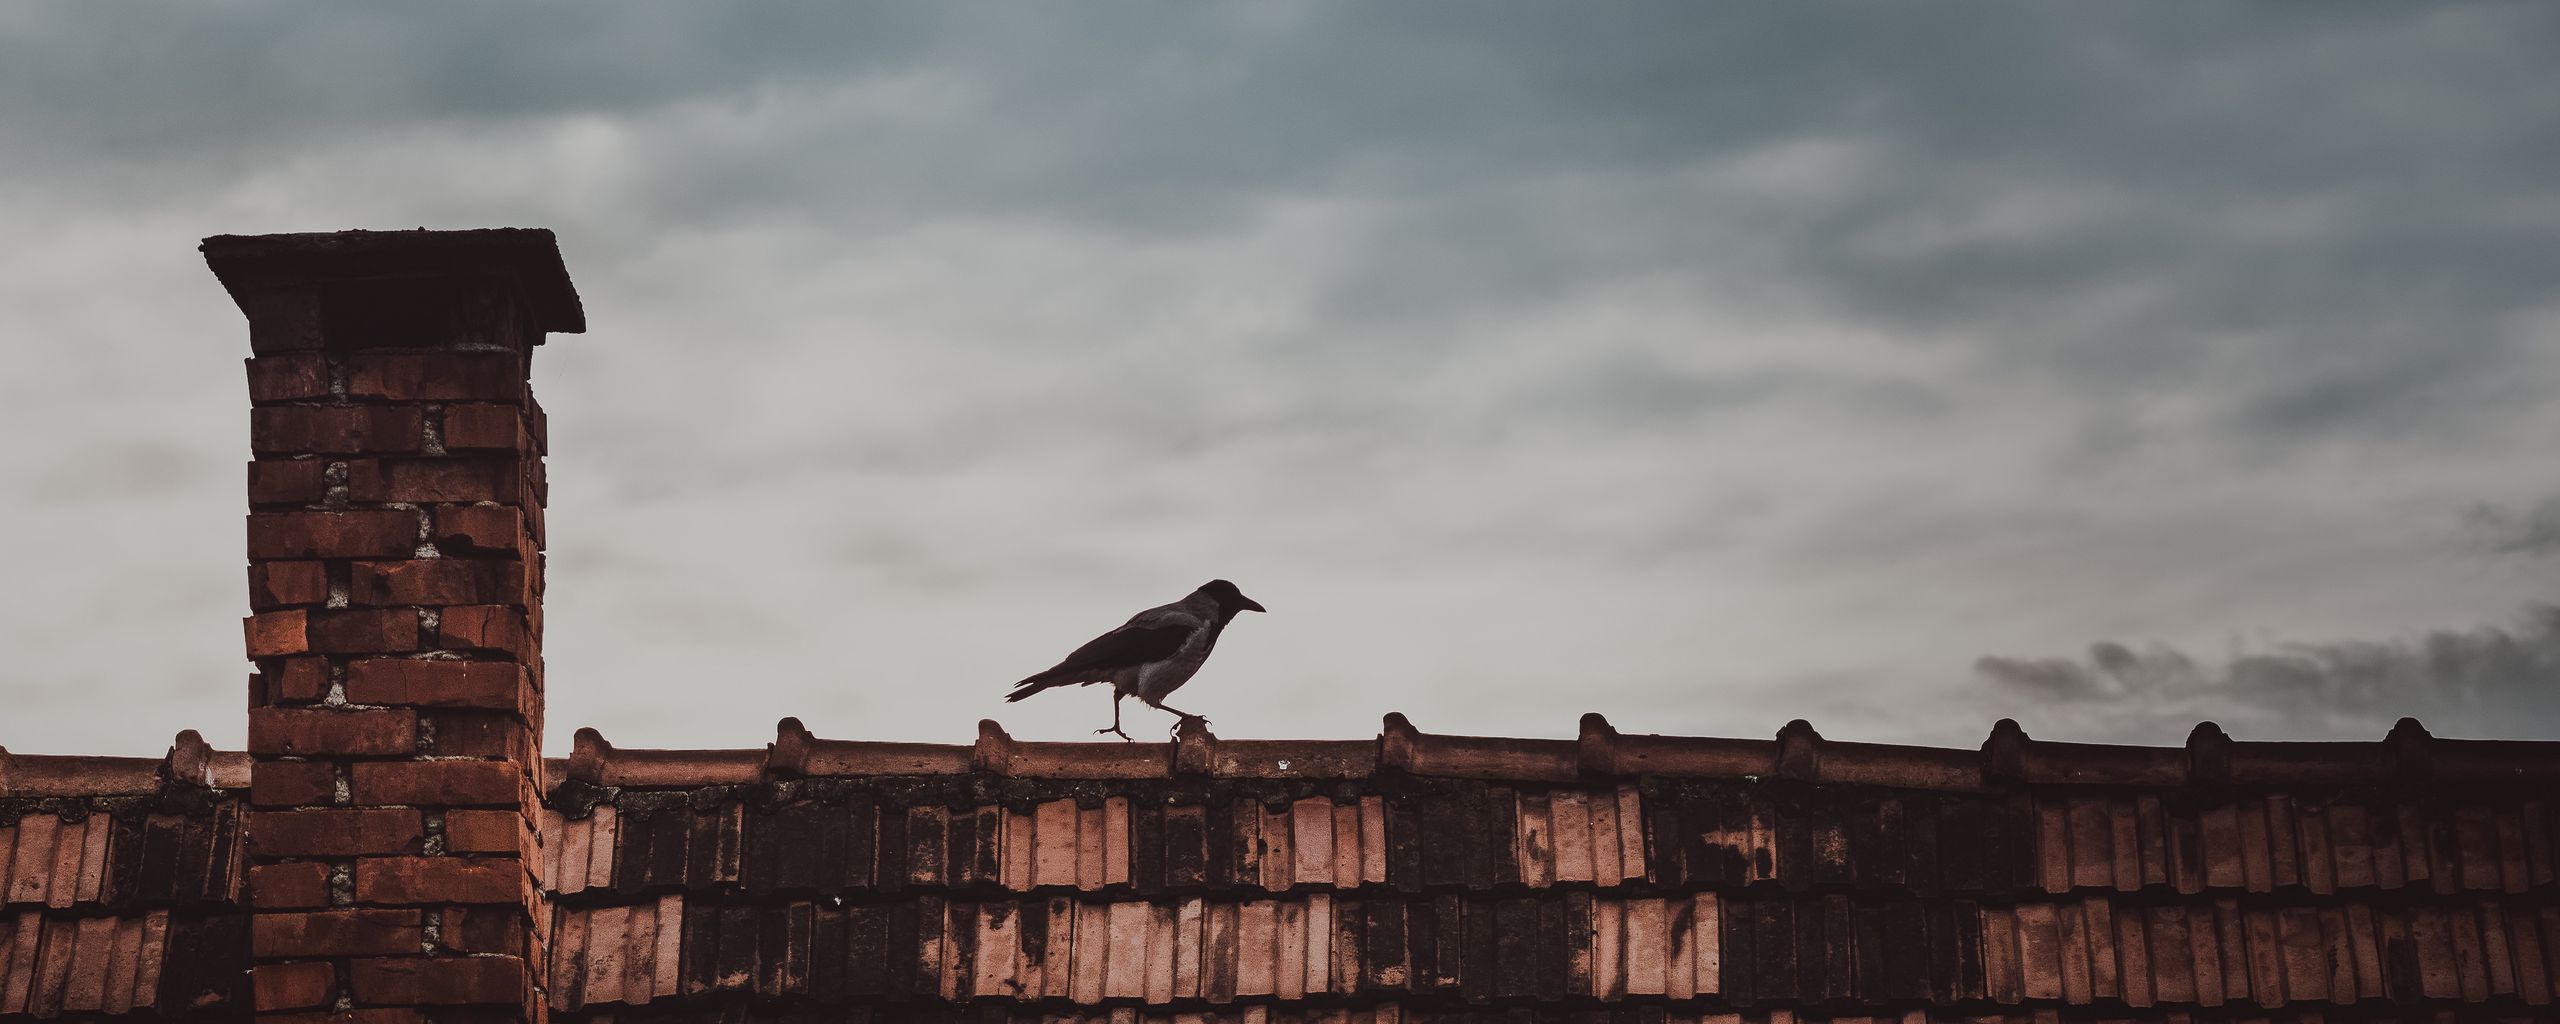 Птицы над крыше монастырь Юрьево